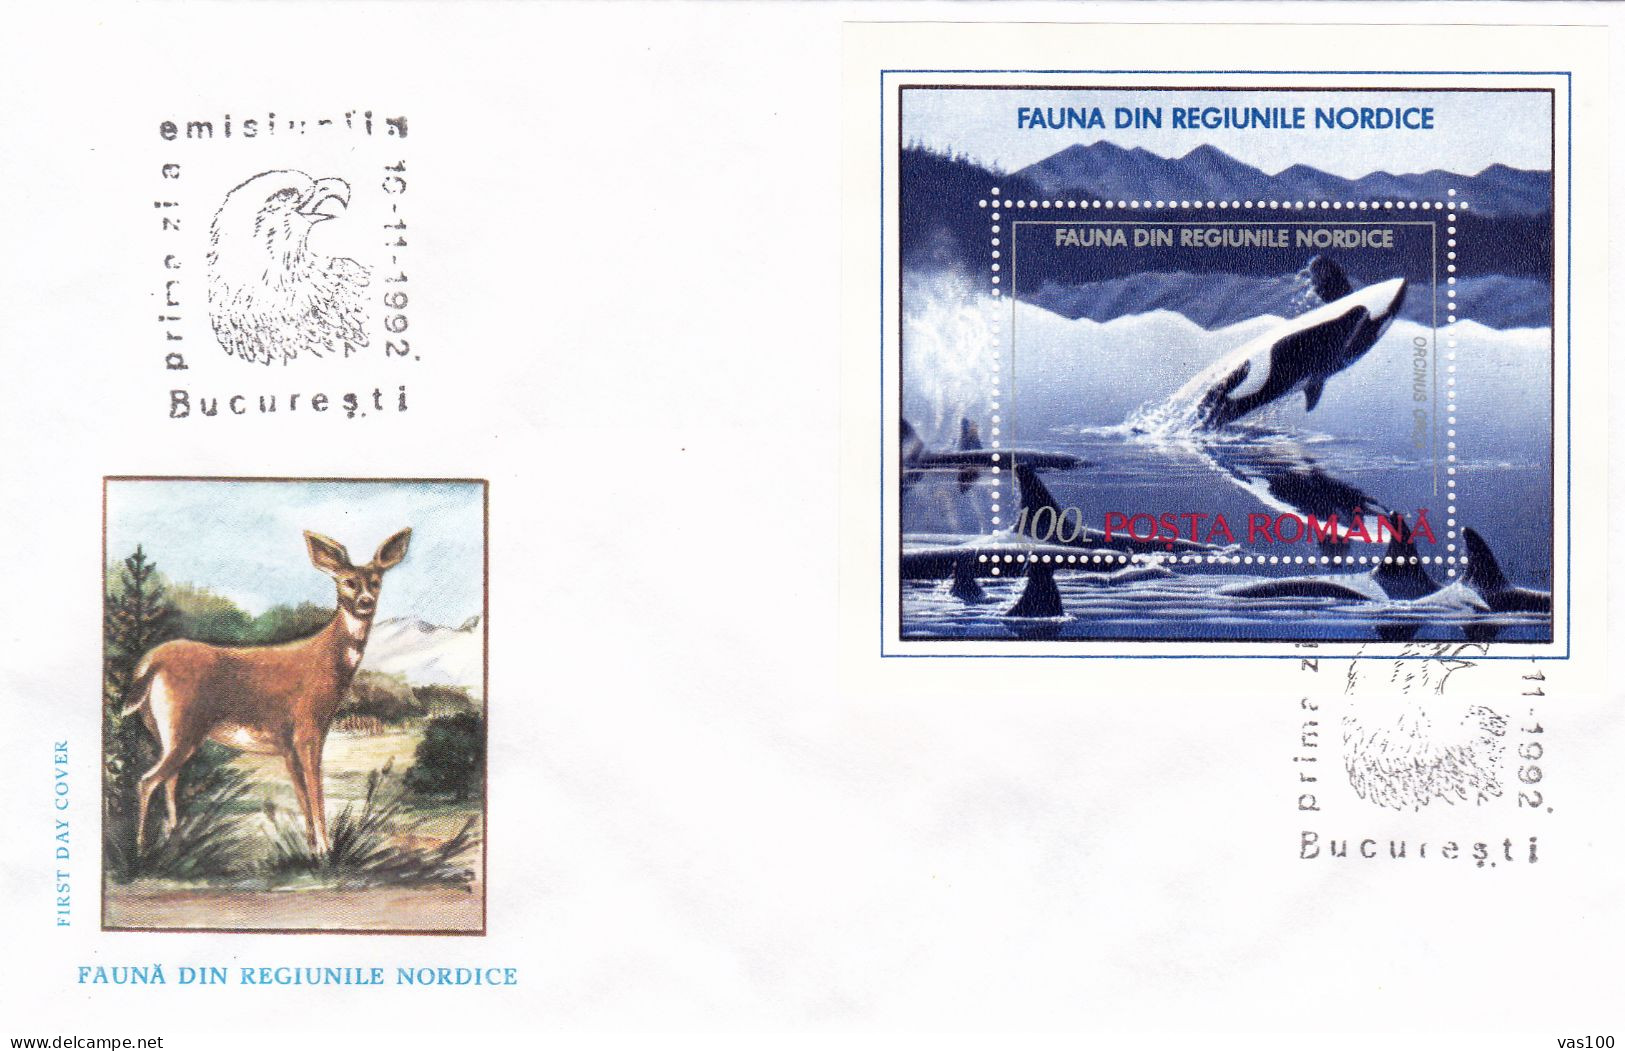 ANIMALS, NORTHERN TERRITORIES FAUNA, BIRDS, MAMMALS, KILLER WHALE, ORCA, COVER FDC, 1992, ROMANIA - FDC